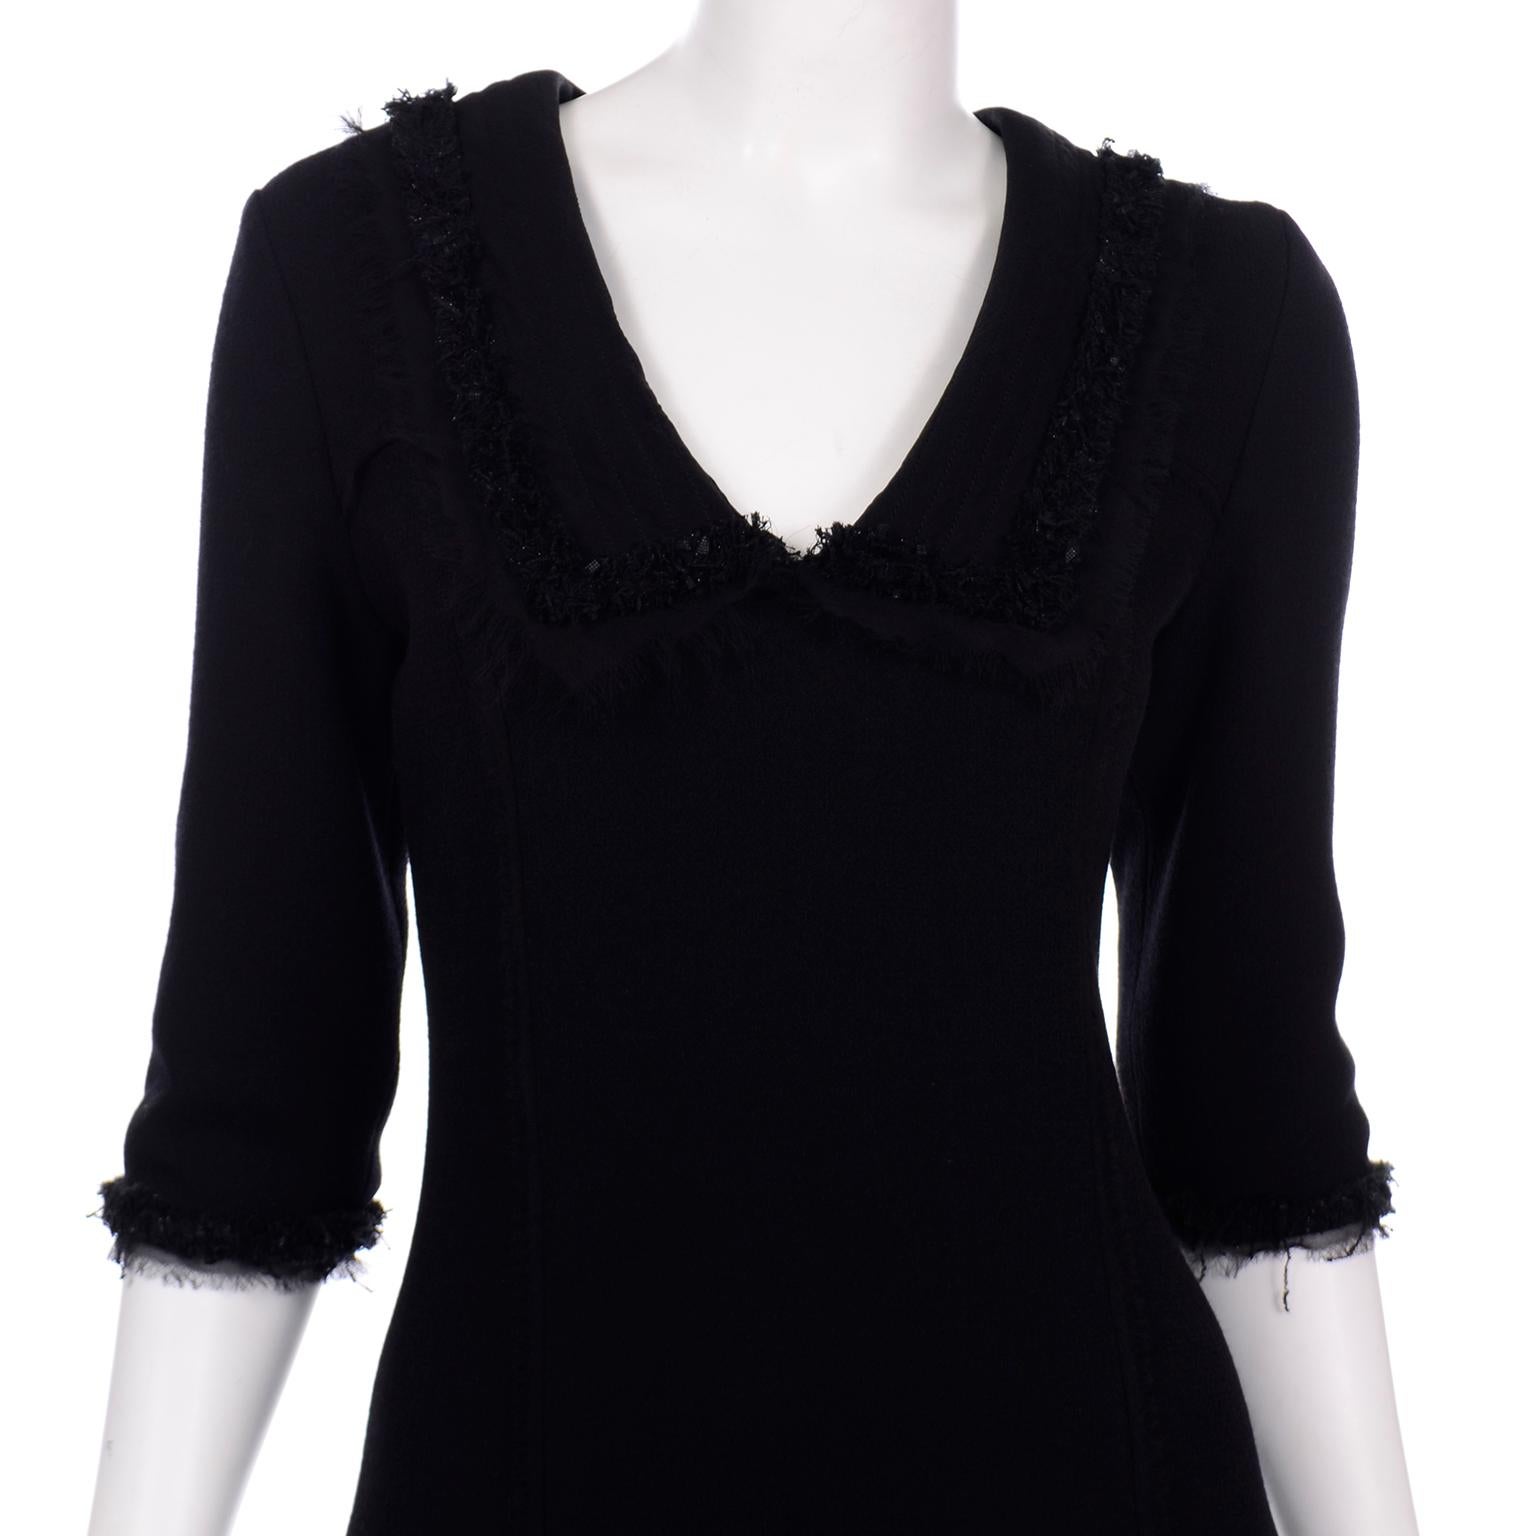 Women's Oscar de la Renta Fall 2010 Black Dress With Raw Edges & Sheer Panel Pleating For Sale